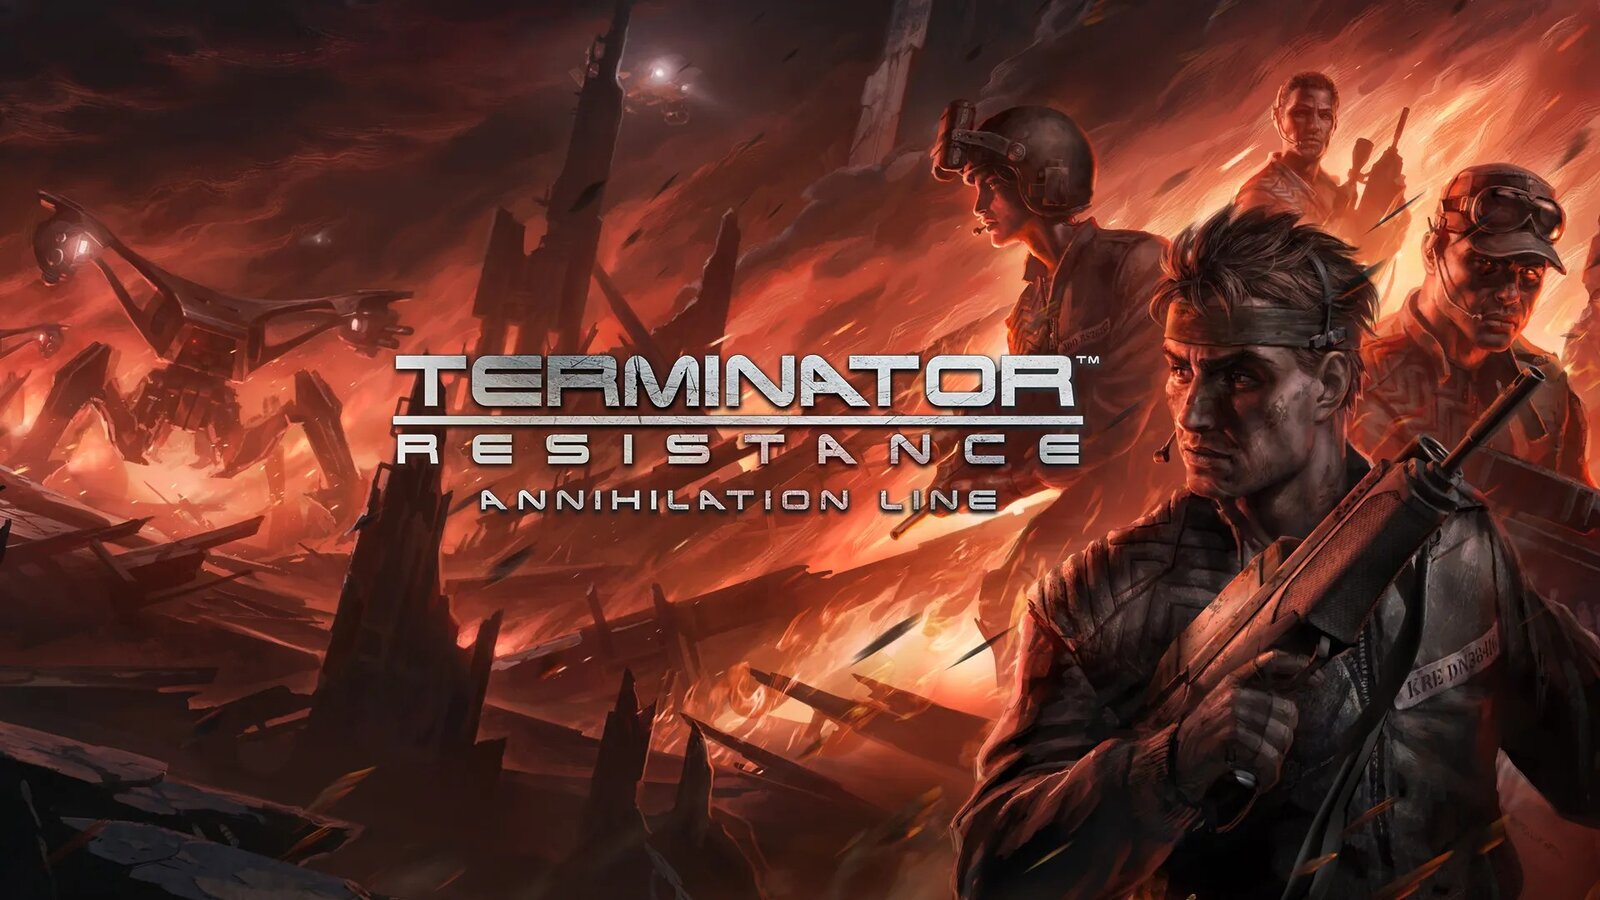 Terminator: Resistance - Annihilation Line